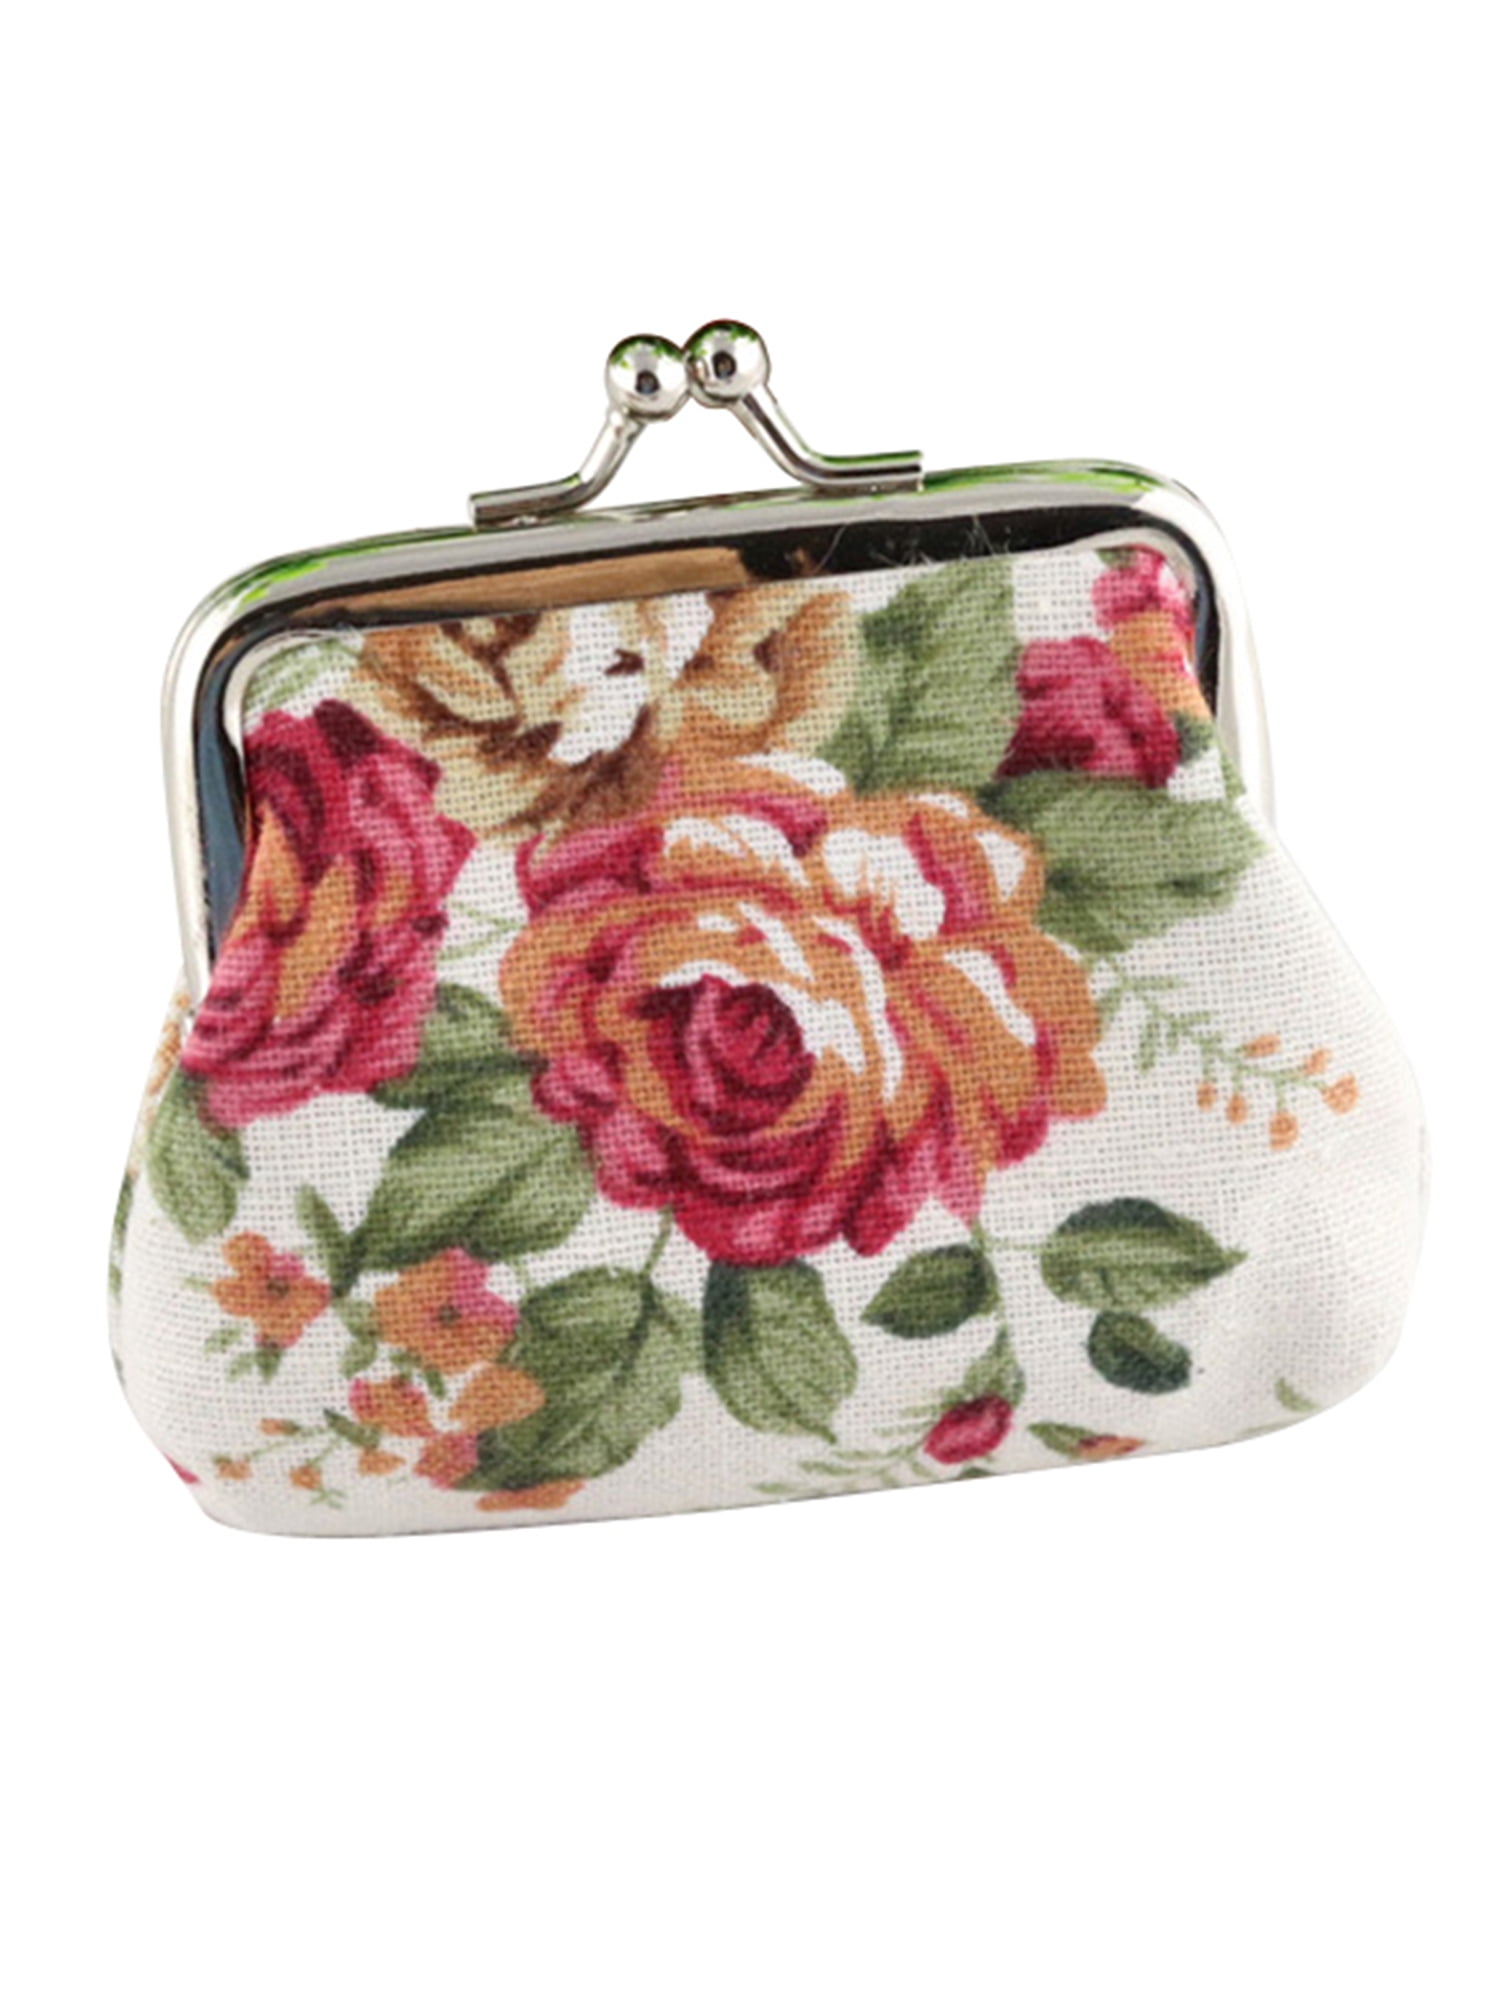 Women Girls Vintage Rose Flower Small Wallet Hasp Change Coin Purse Clutch Bag 